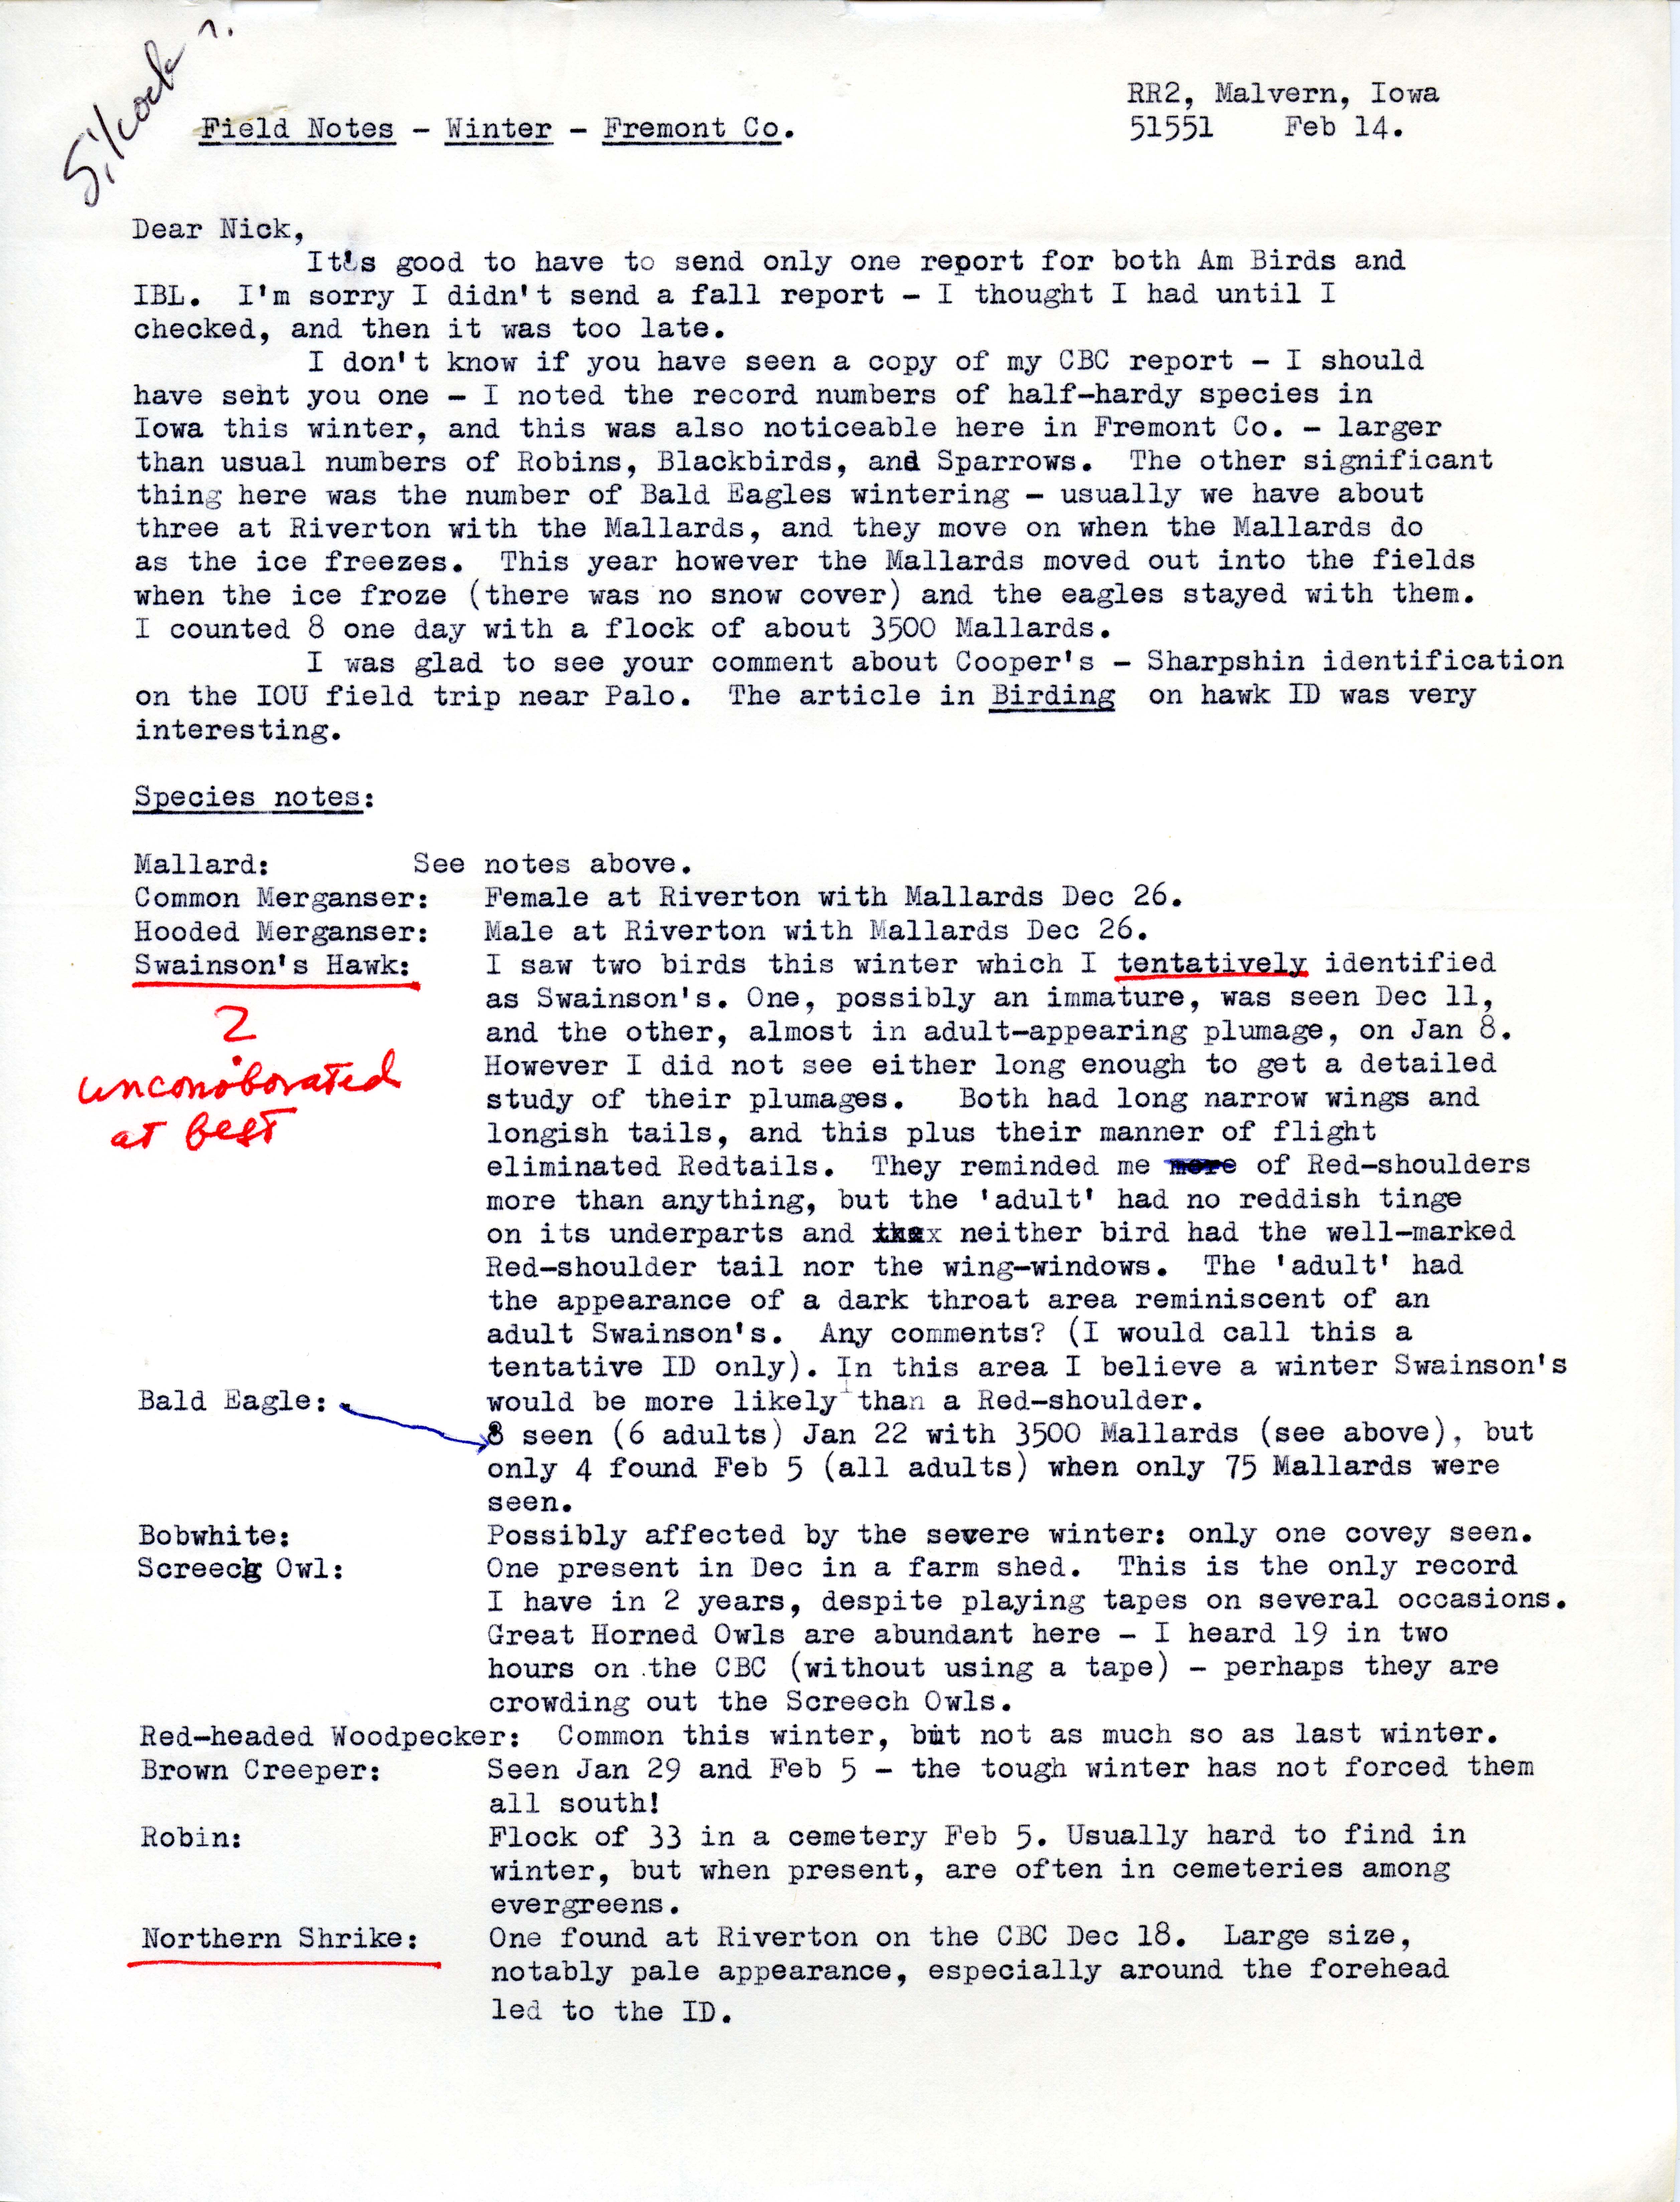 W. Ross Silcock letter to Nicholas S. Halmi regarding field notes, February 14, 1977